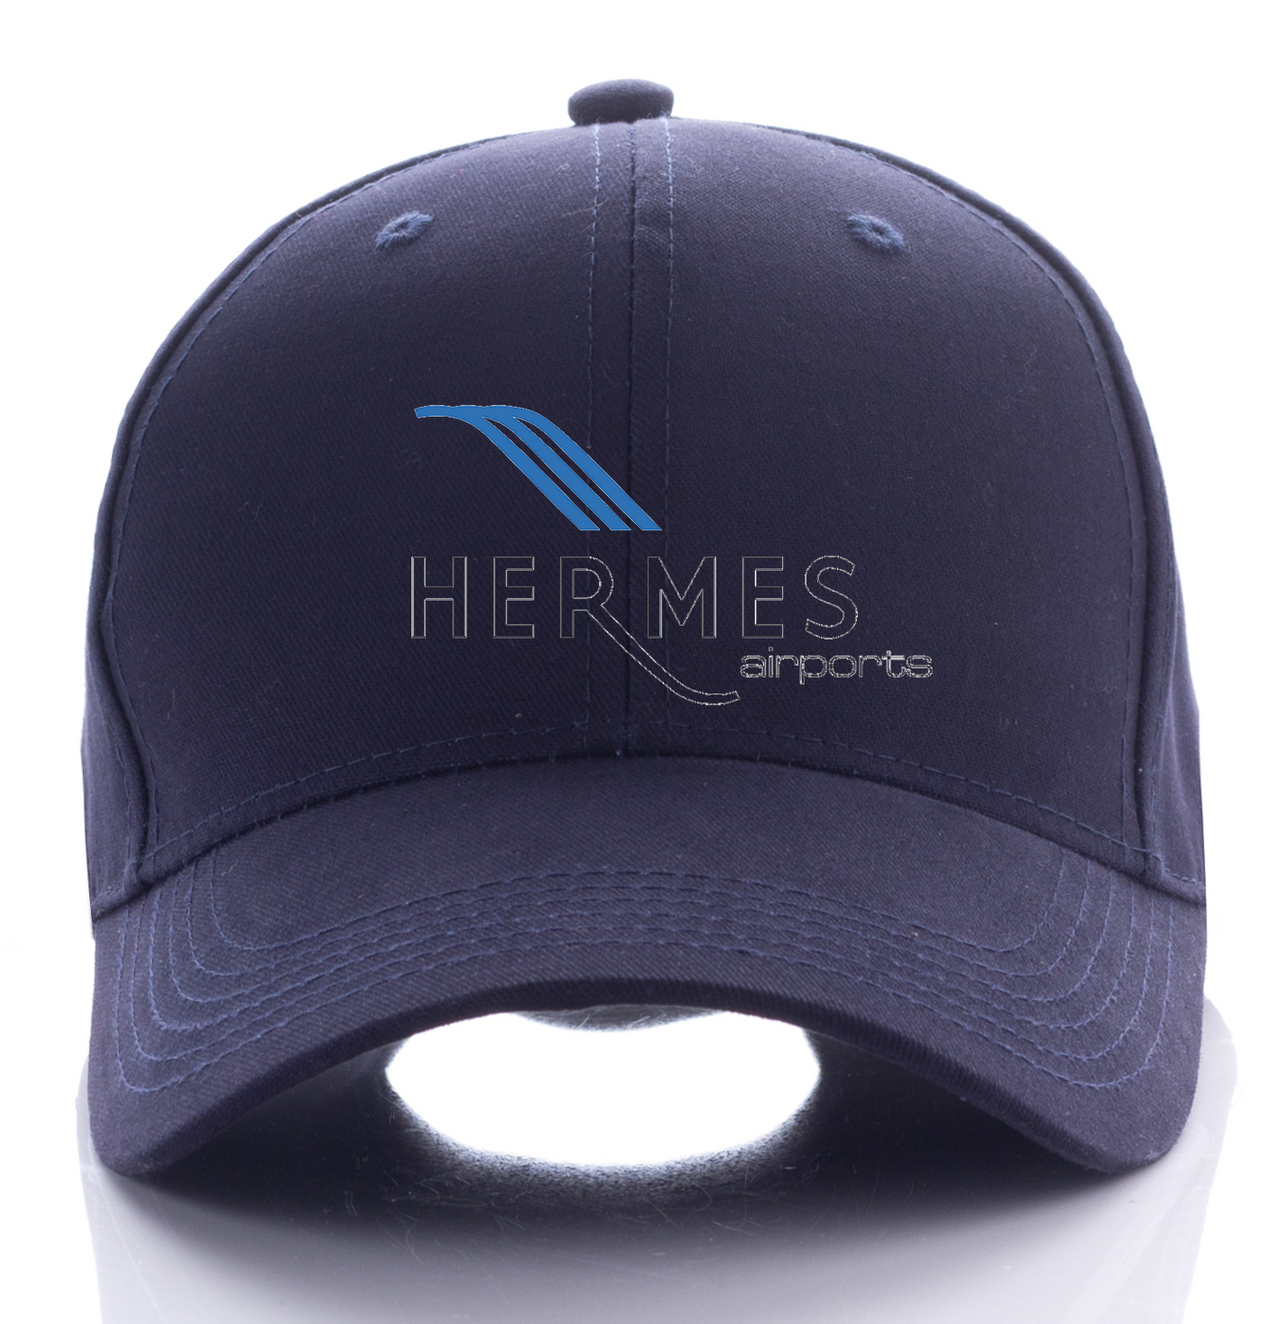 HERMES AIRLINE DESIGNED CAP